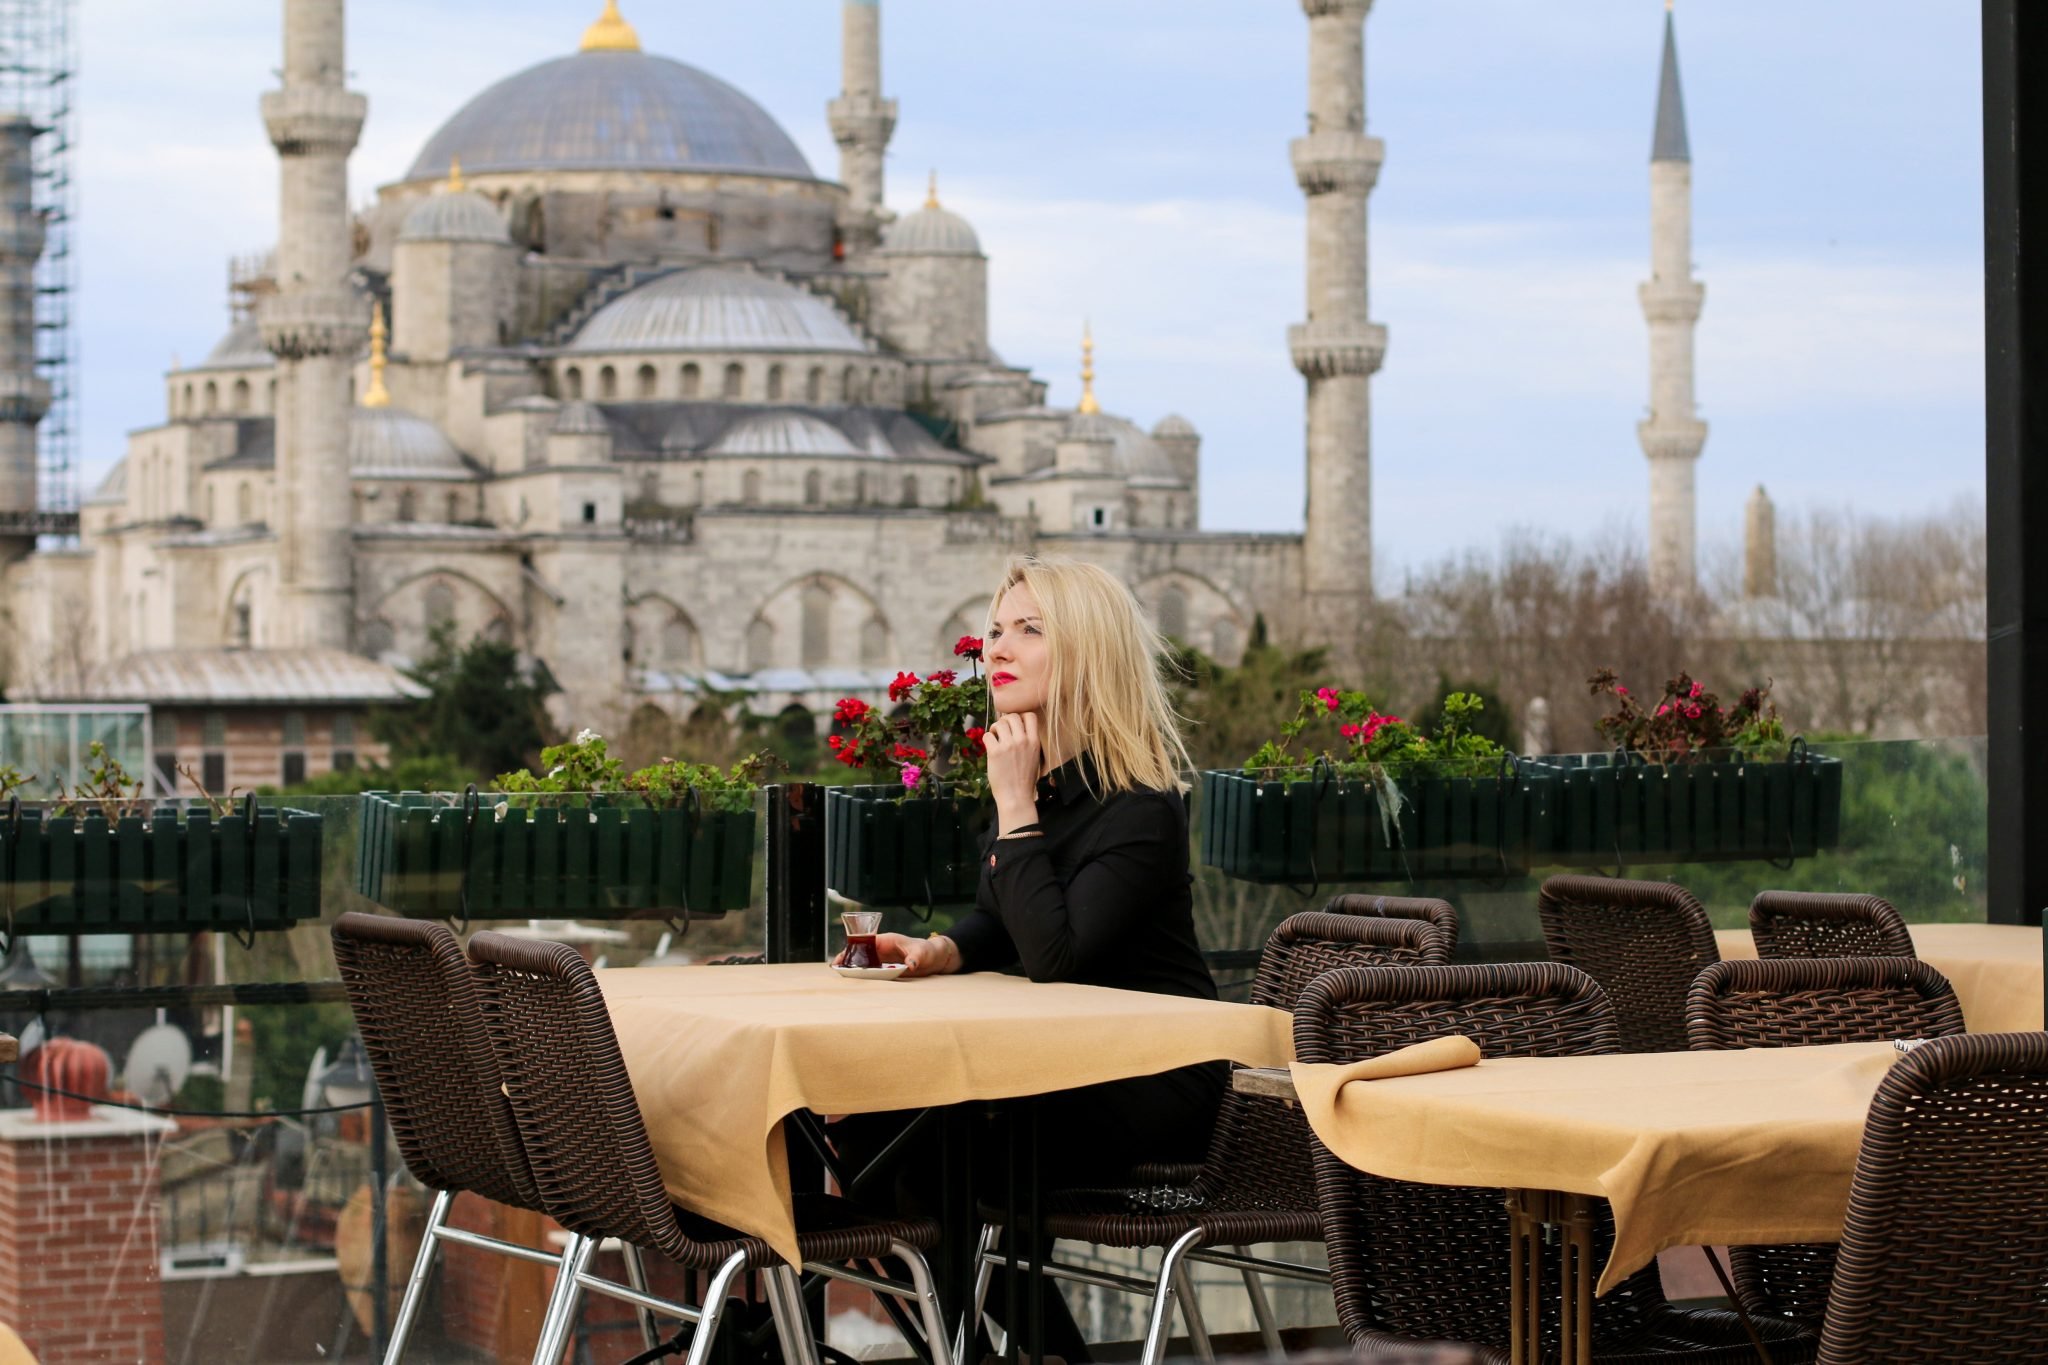 Звезды в стамбуле. Стамбул 15 15 экскурсия. Стамбул девушка. Фотосессия в Стамбуле. Красивая девушка в Стамбуле.